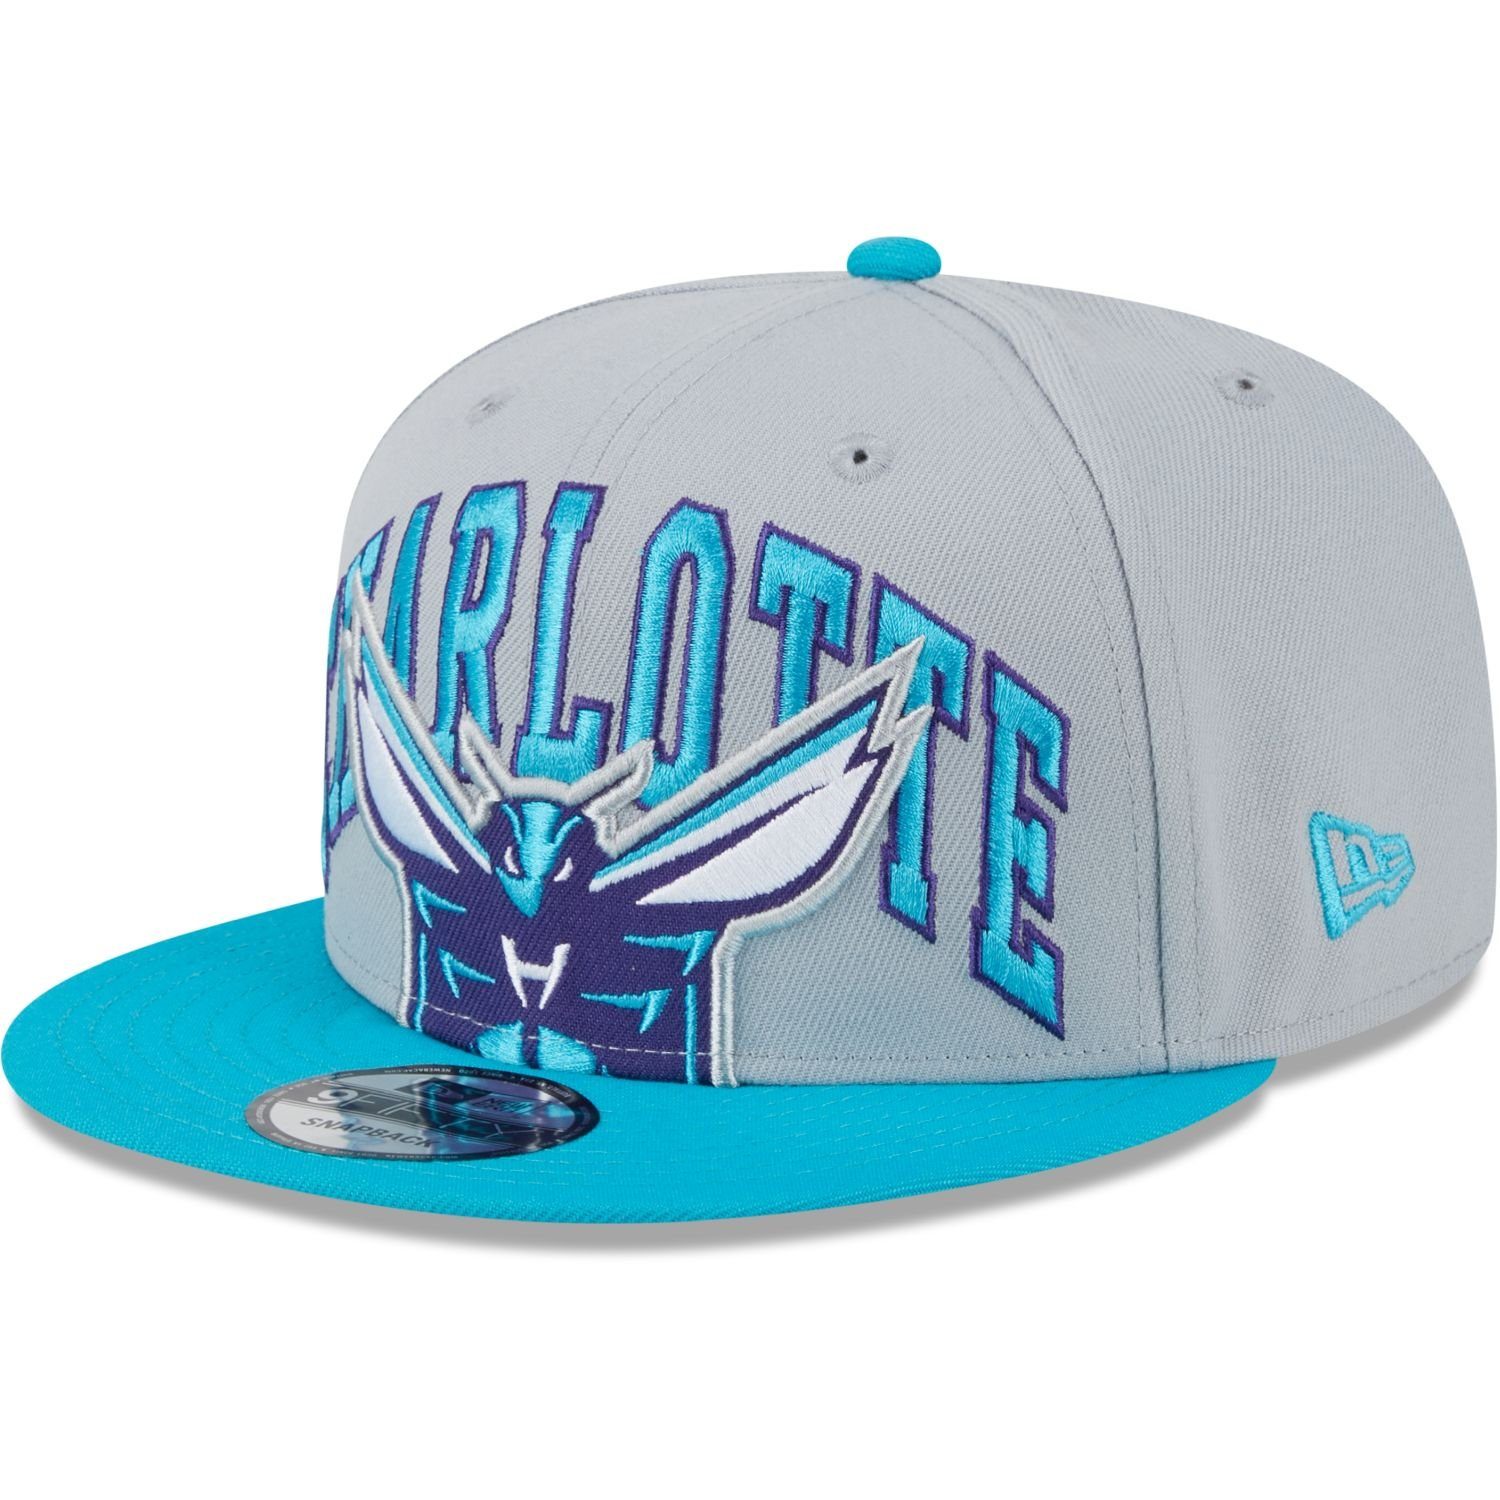 New Era Snapback Cap 9FIFTY NBA TIPOFF Charlotte Hornets